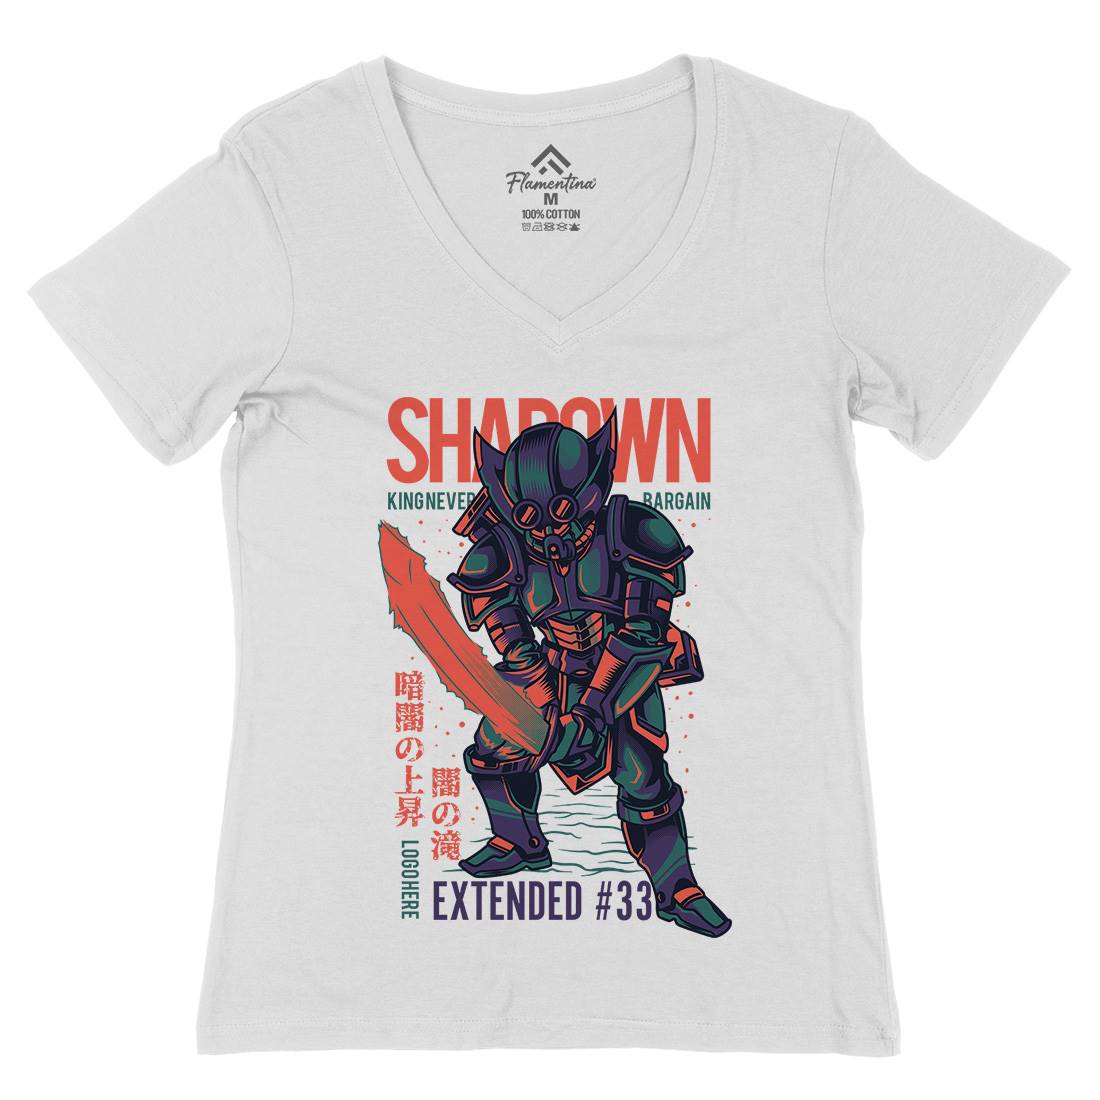 Shadown Knight Womens Organic V-Neck T-Shirt Warriors D812